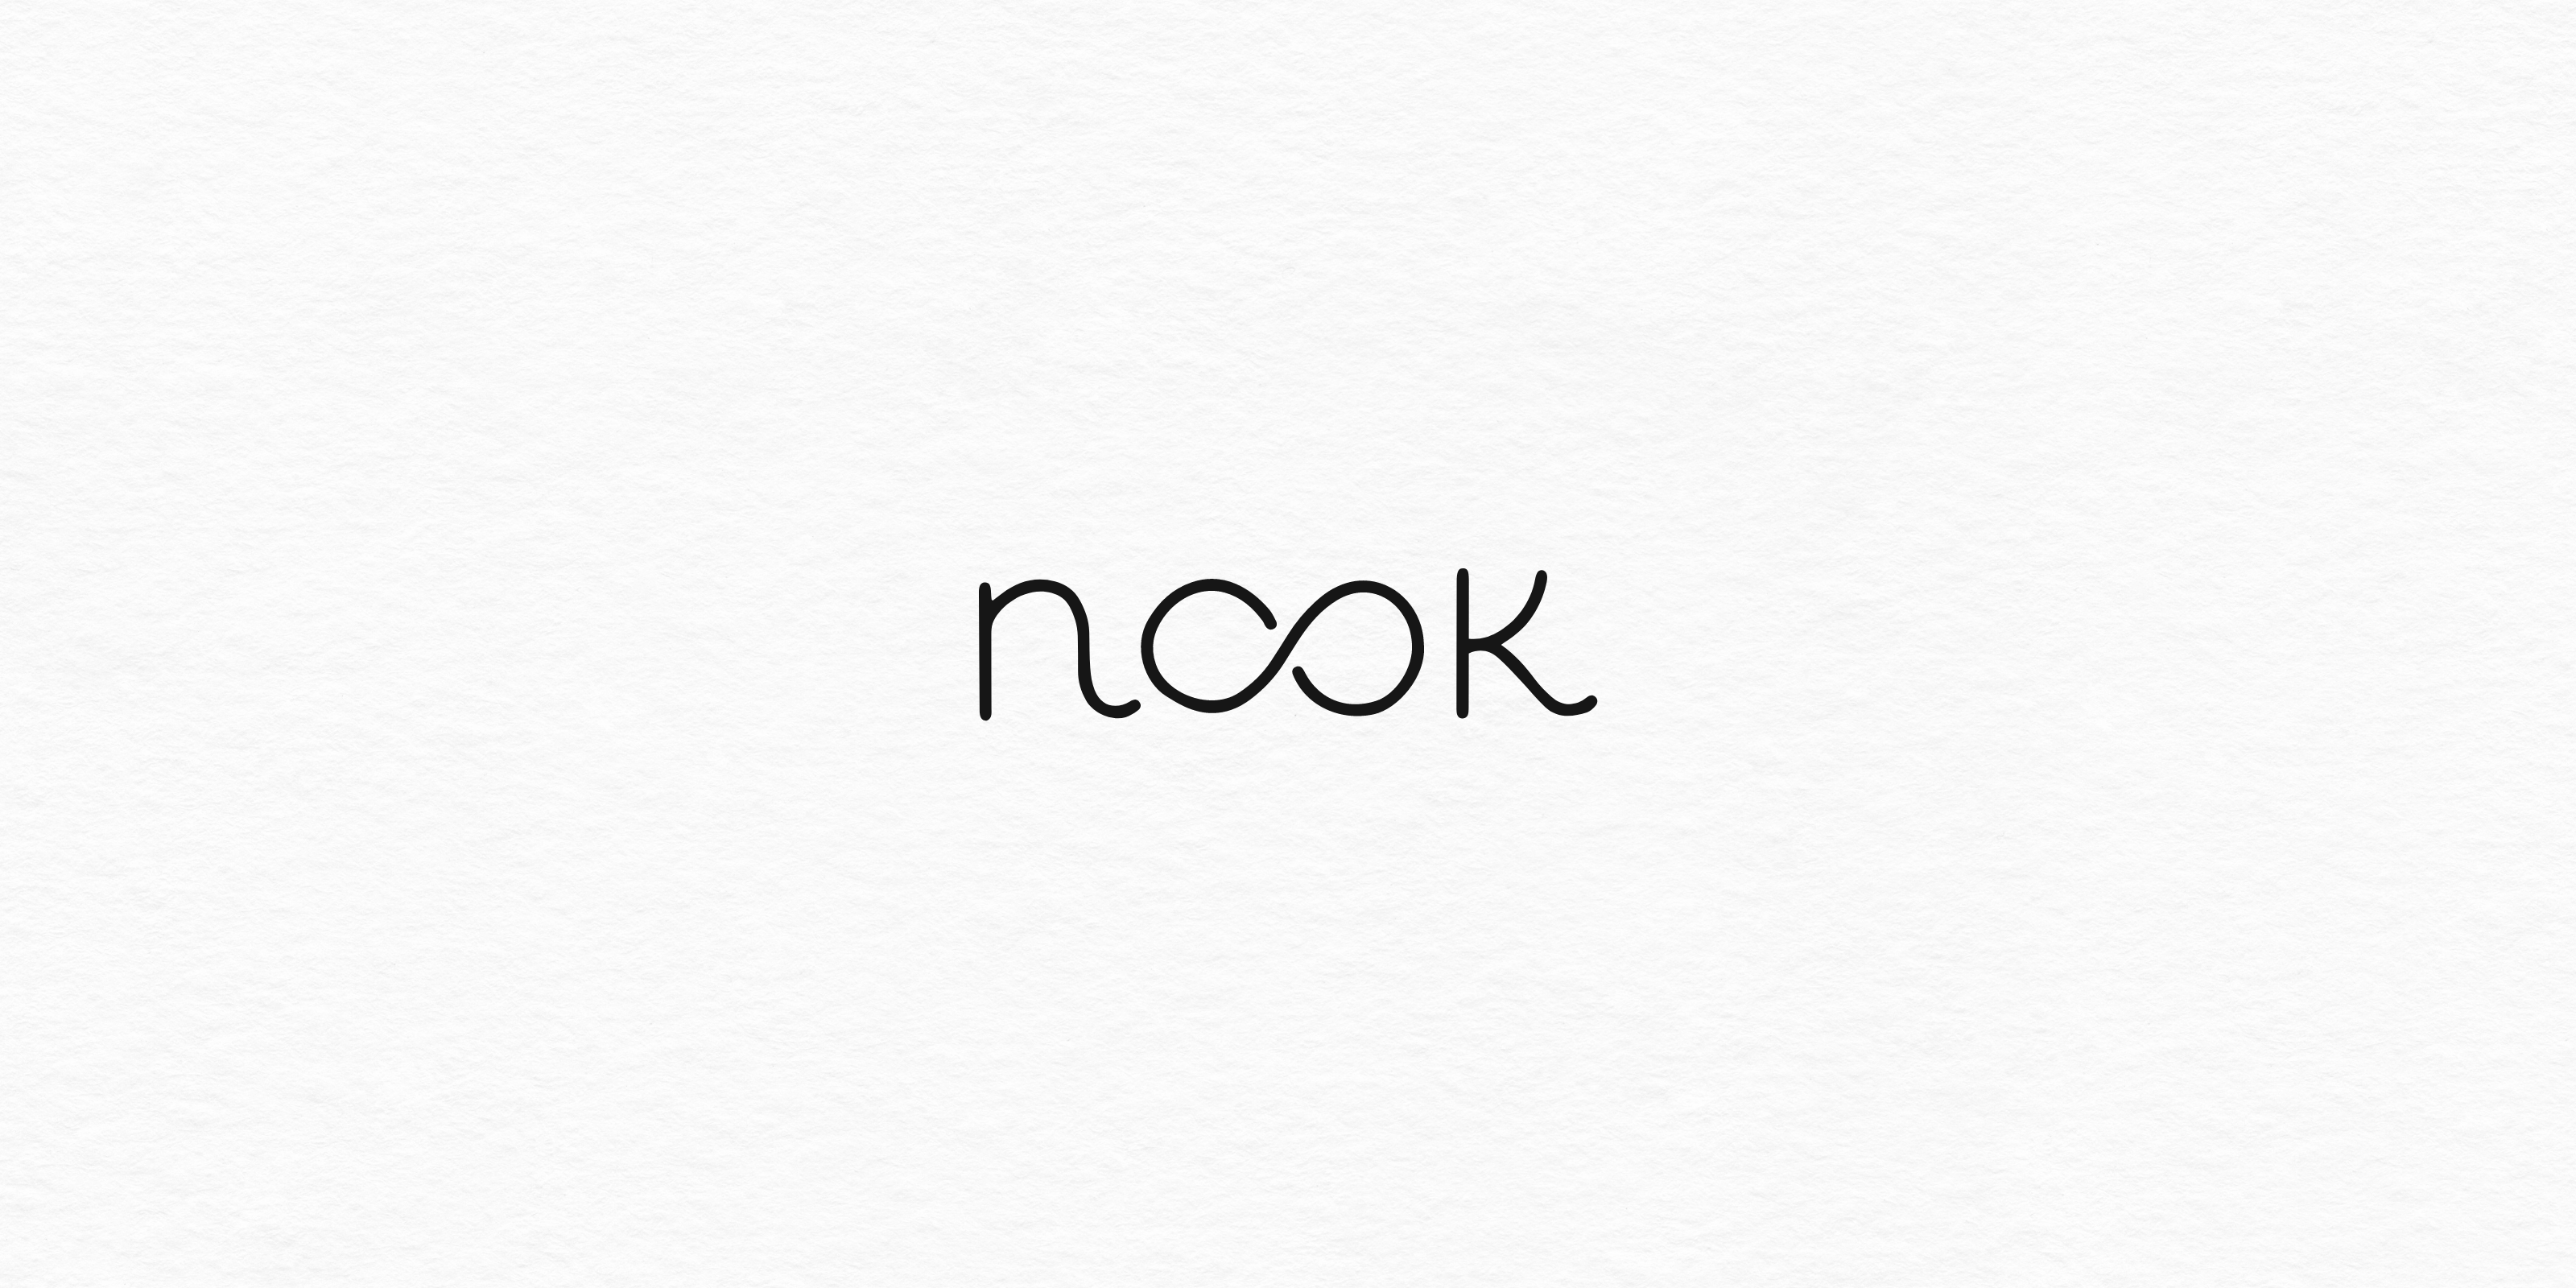 Minimalistic modern logo "nook"